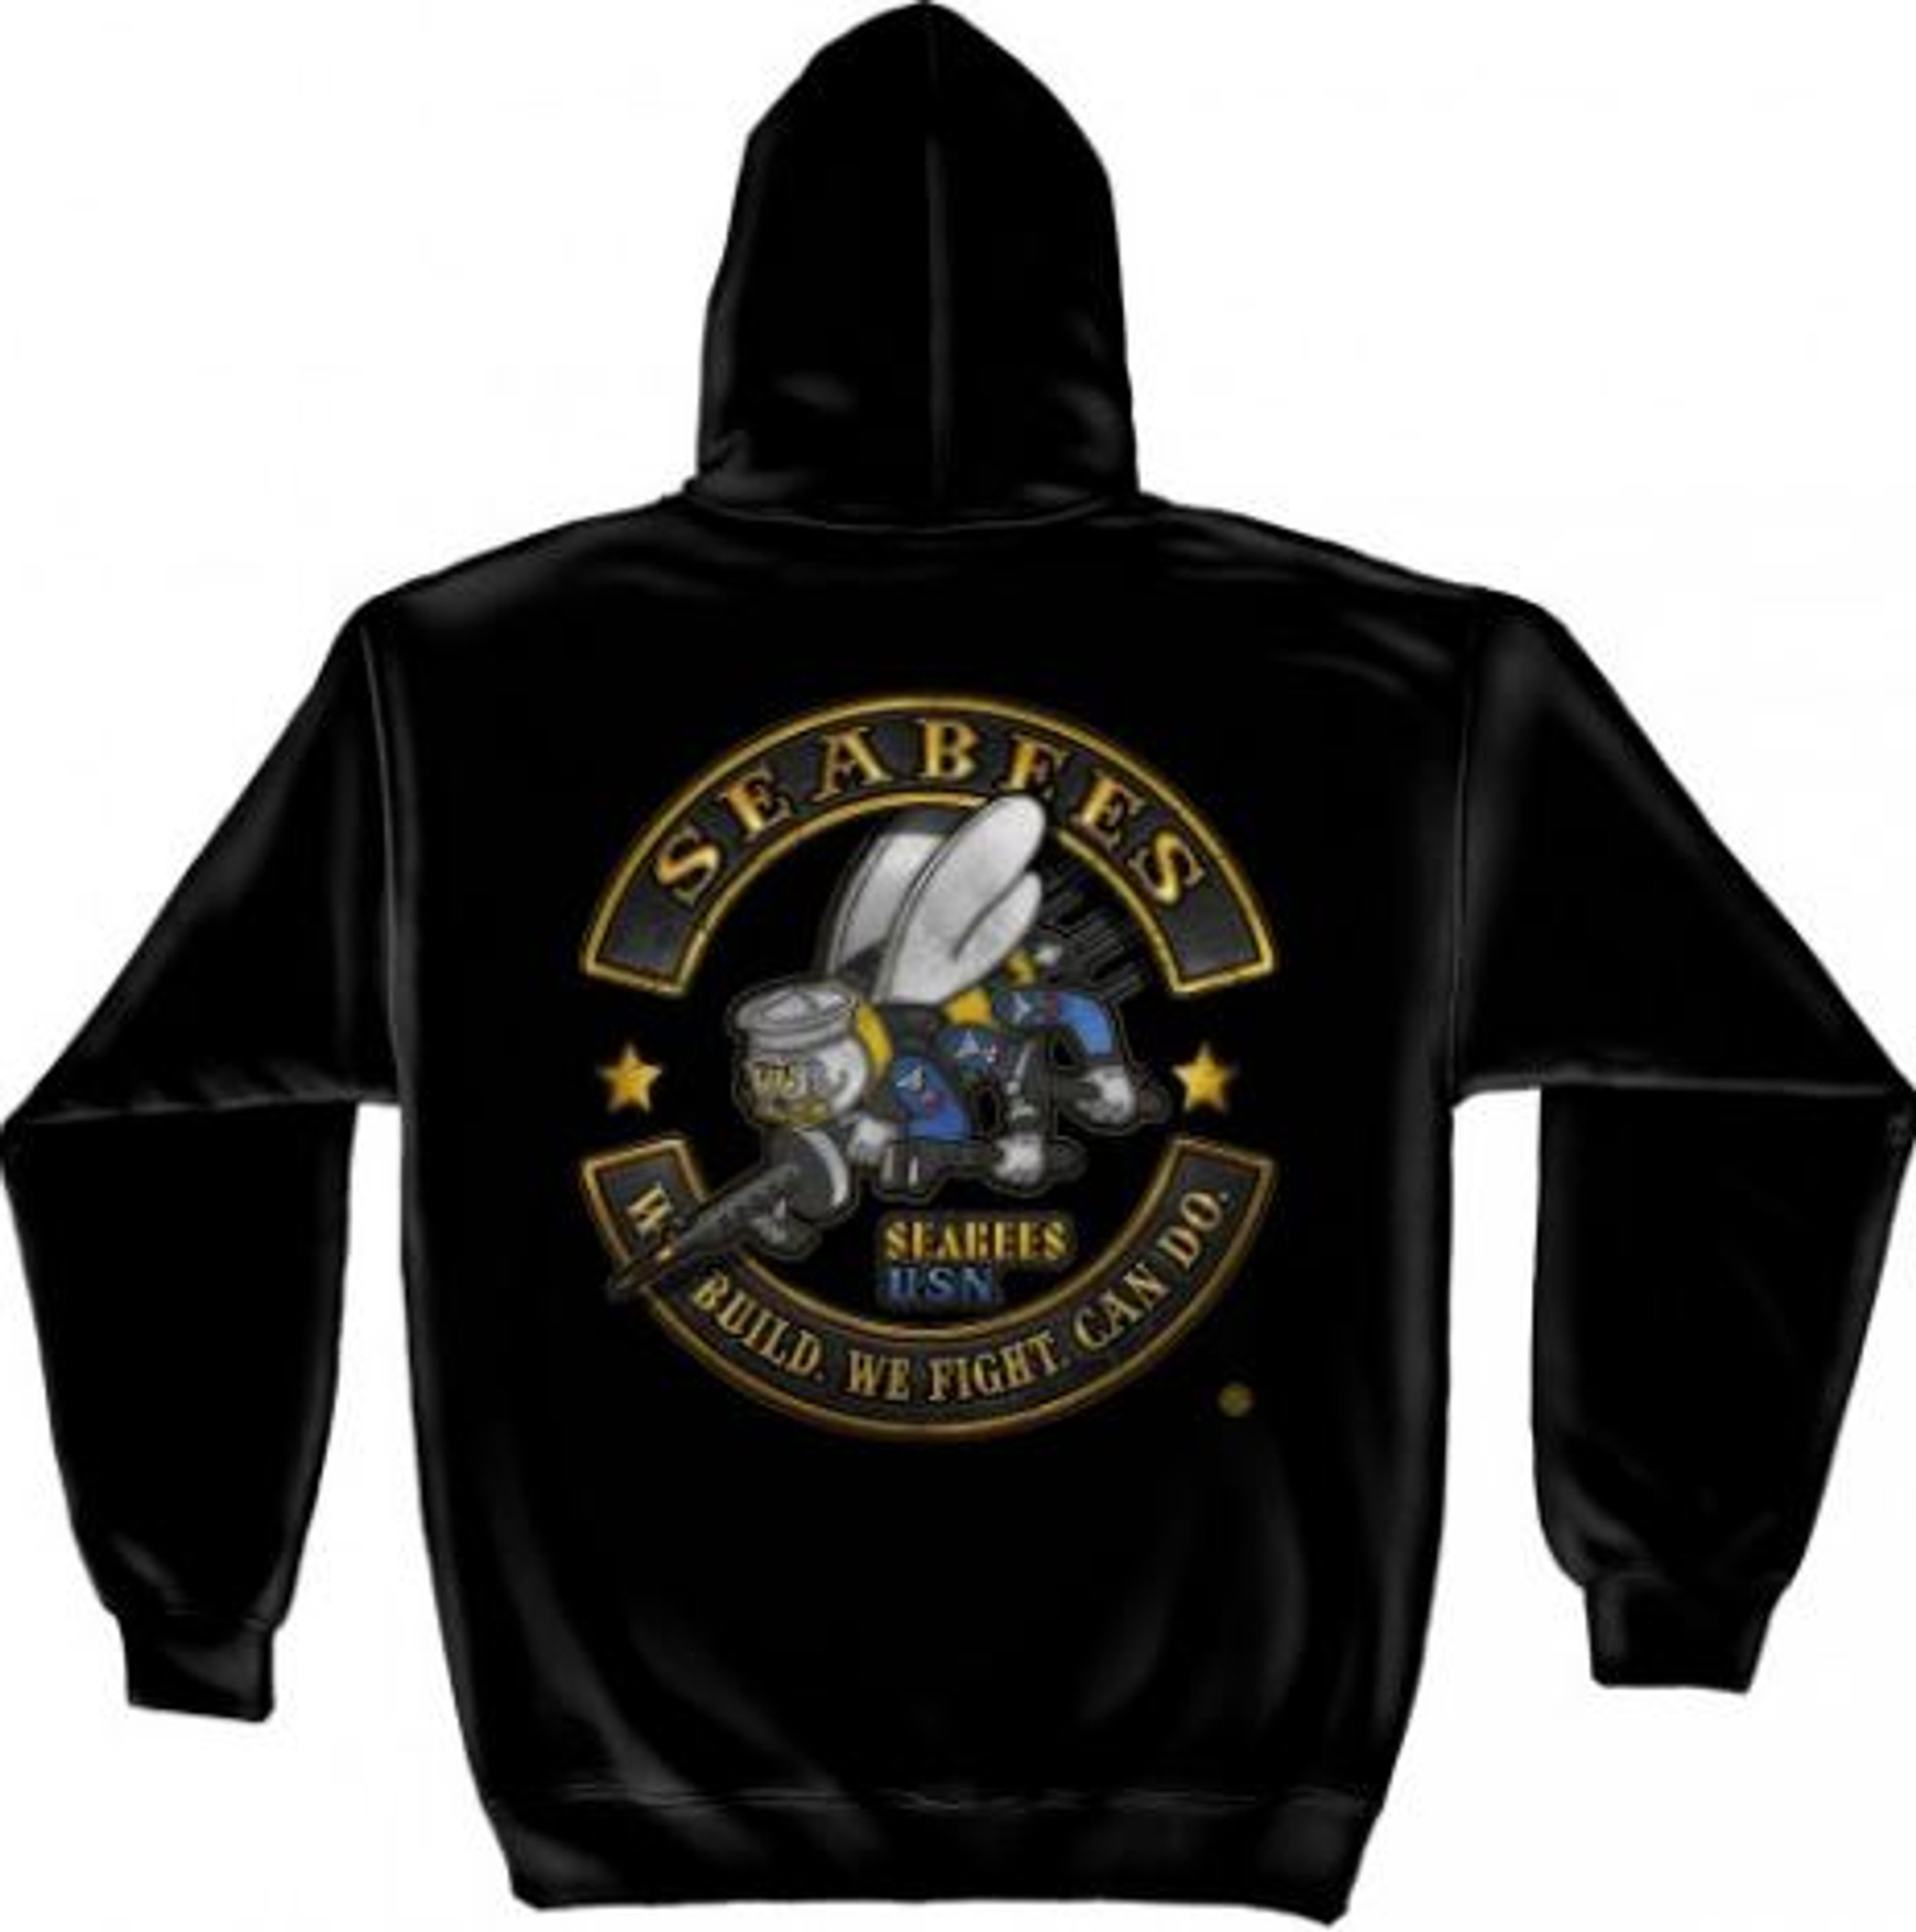 US Navy "Sea Bees" Hooded Sweat Shirt